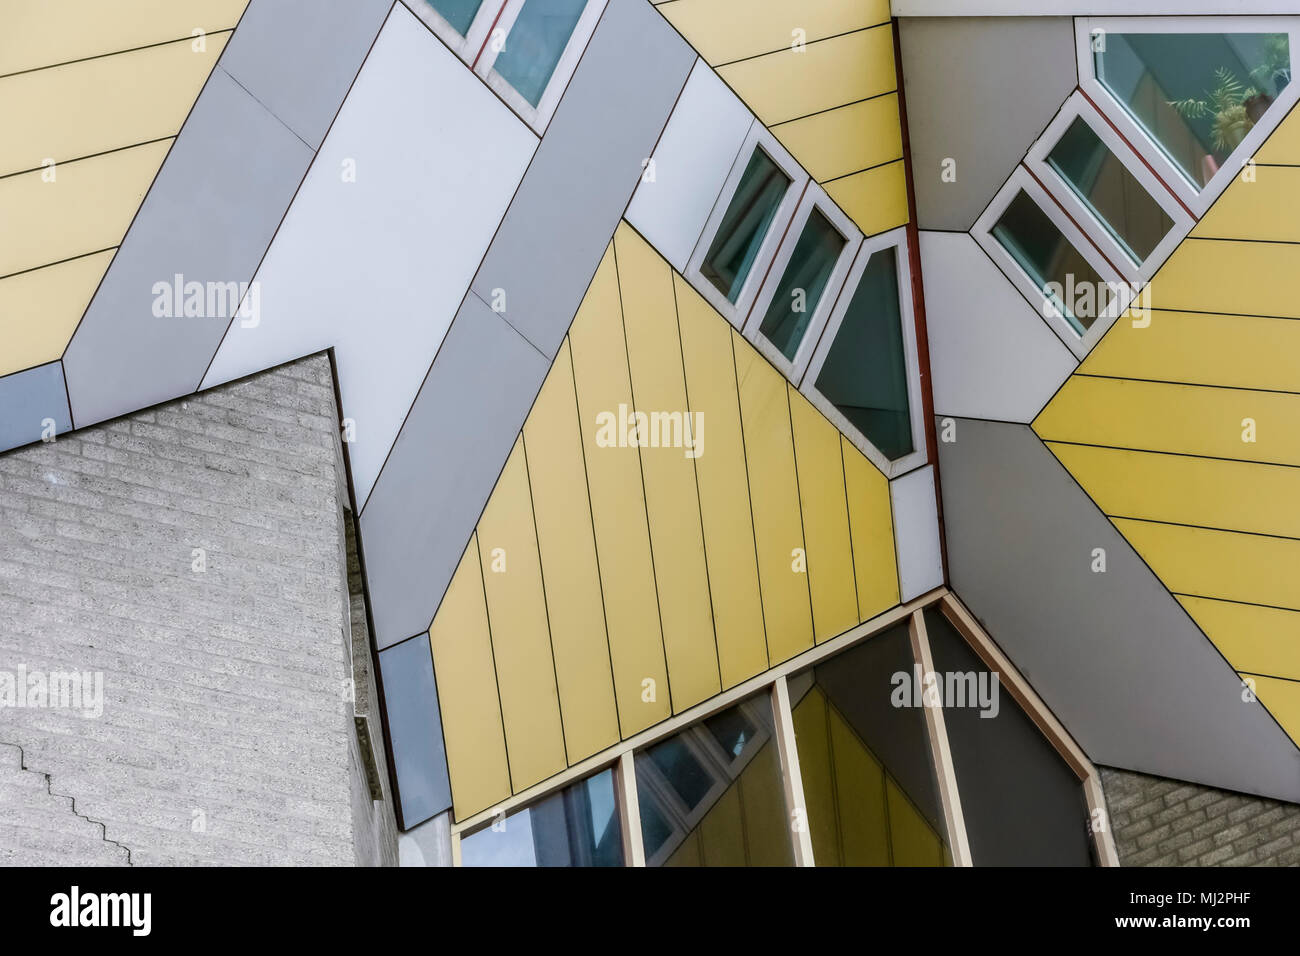 Cubic Houses or Kubuswoningen, designed by the architect Piet Blom. Architecture. Kijk Kubus. Blaak district, Rotterdam, Netherlands, Holland, Europe Stock Photo